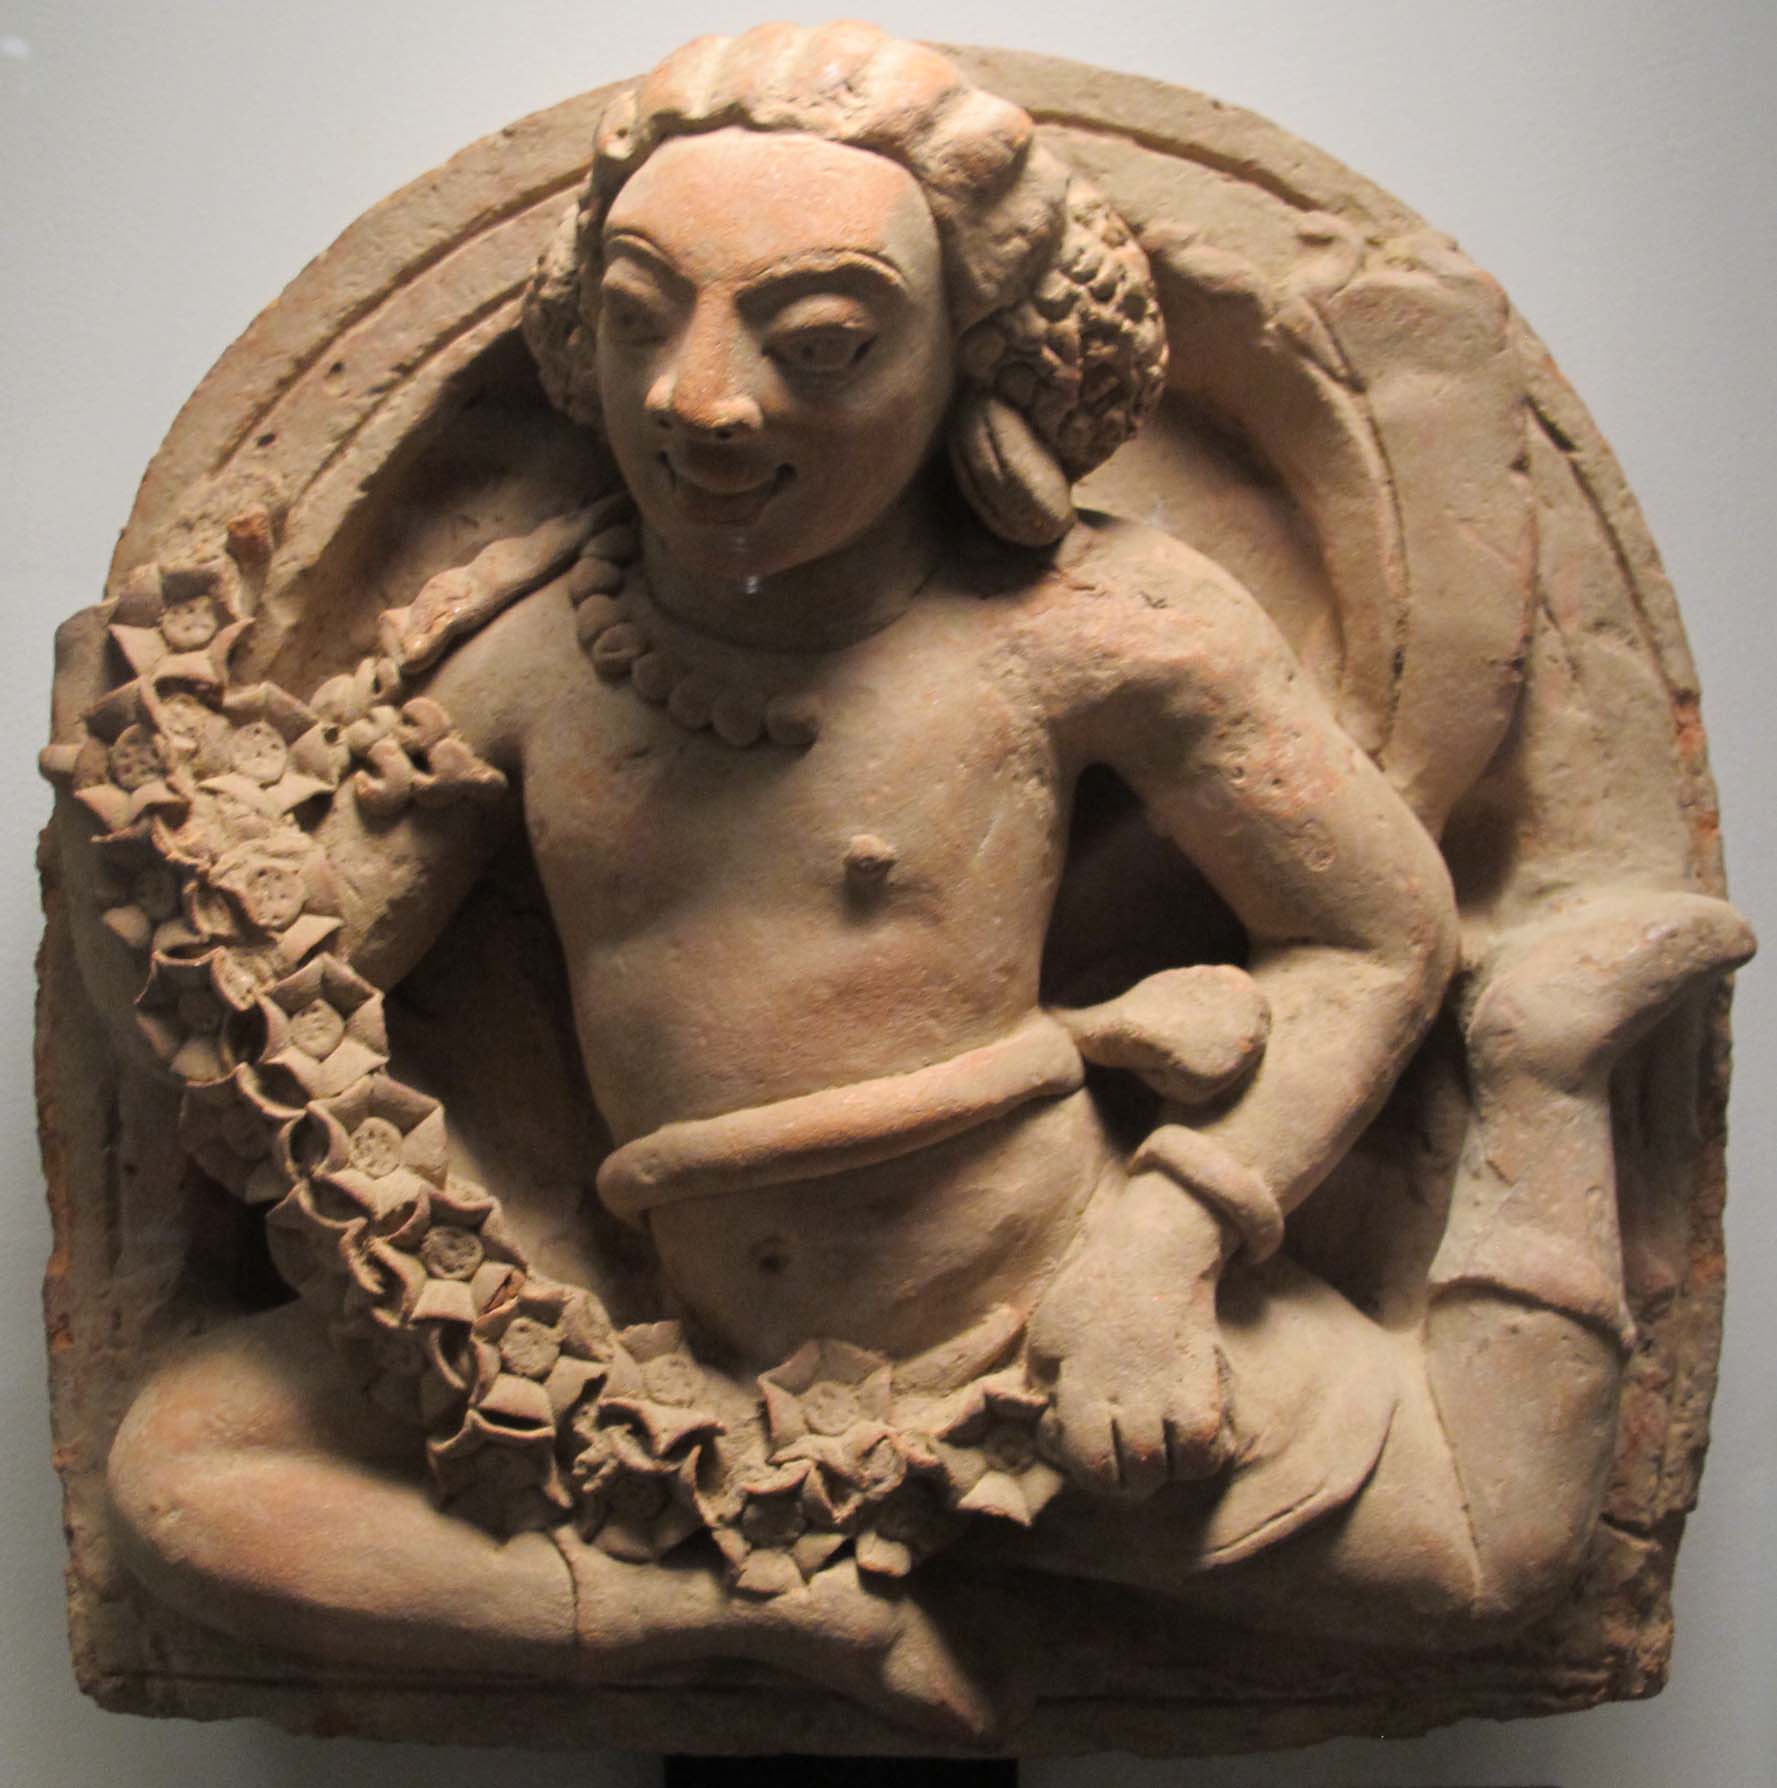 Три печати видьядхара. Видьядхара Геншин. Видьядхары мифология. Скульптура эпохи Гуптов. Притхви скульптура.